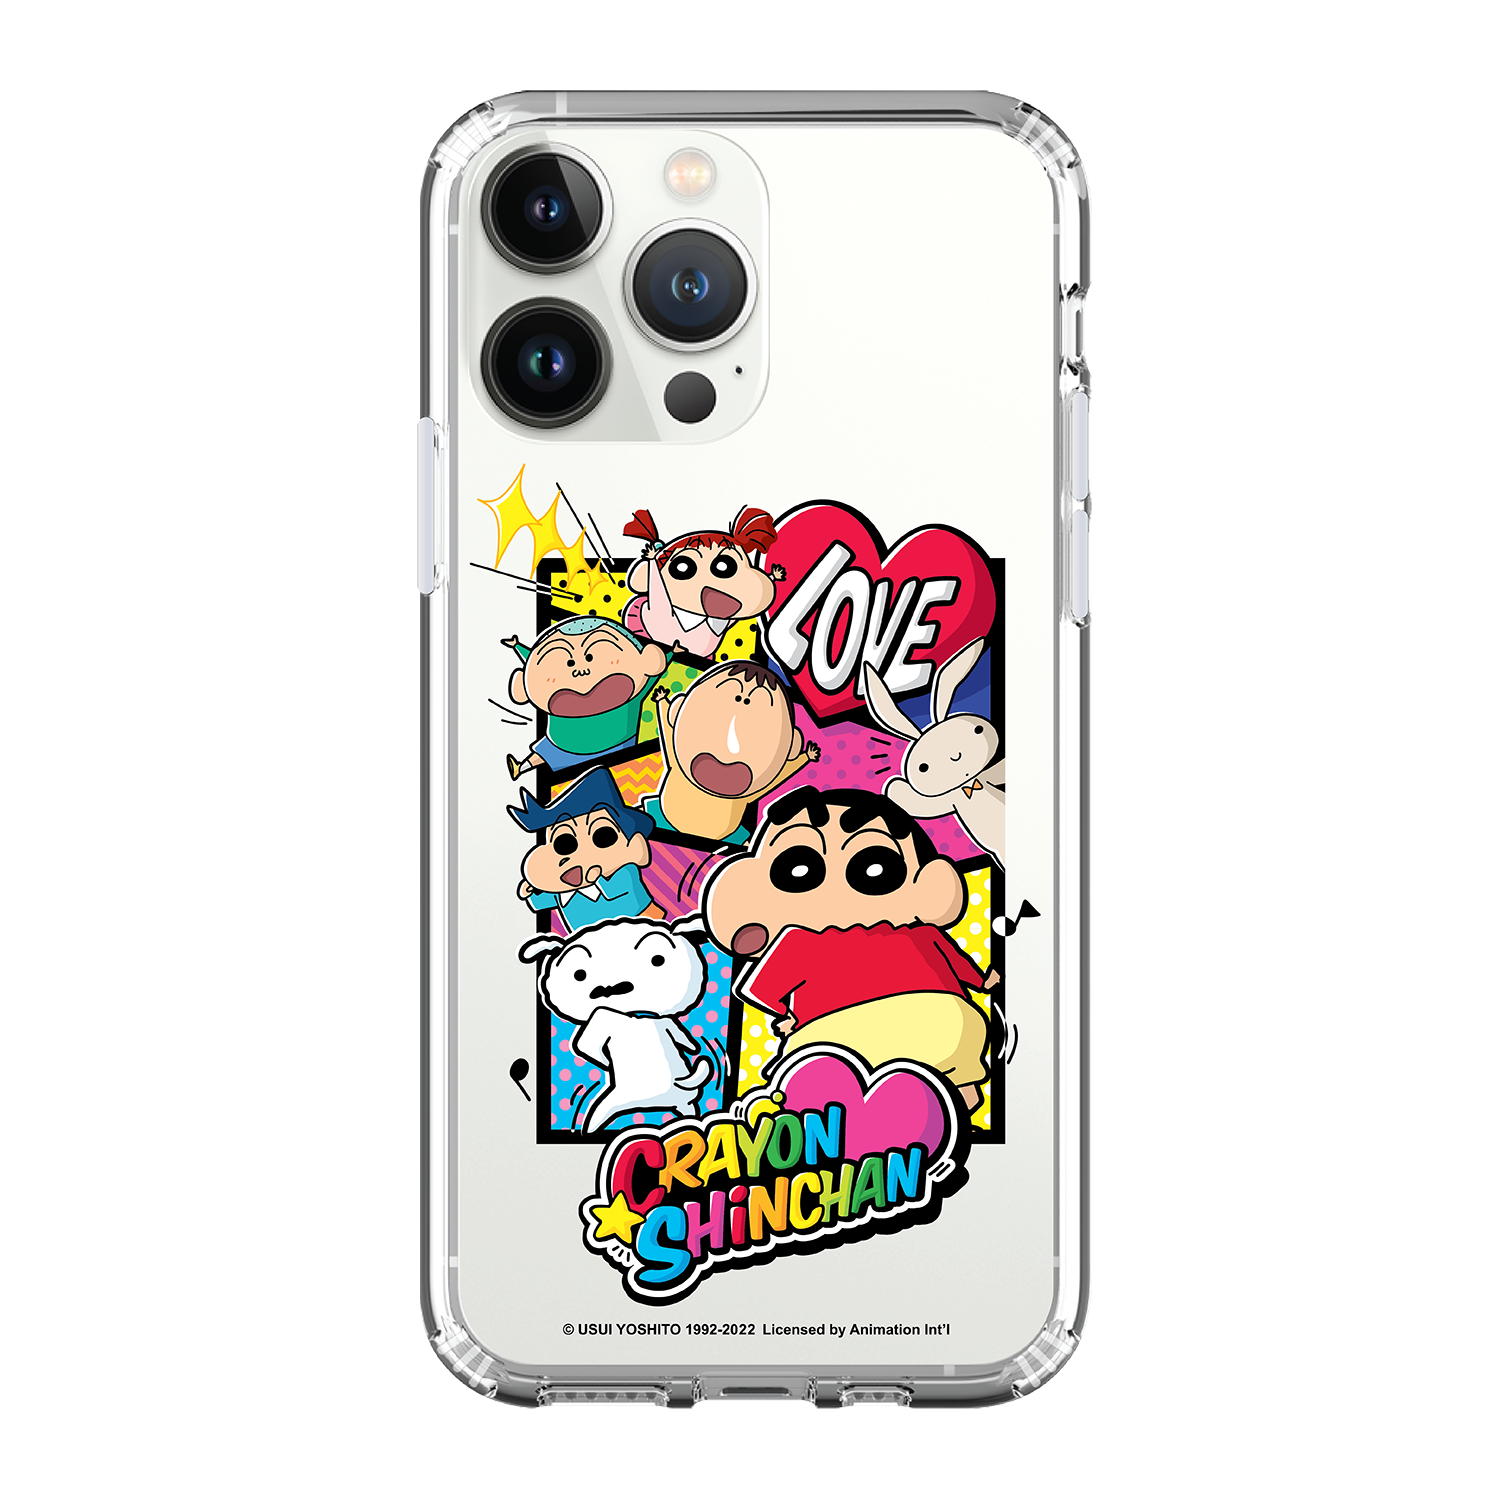 Crayon Shin-chan Clear Case / iPhone Case / Android Case / Samsung Case 蠟筆小新 正版授權 全包邊氣囊防撞手機殼 (SC264)